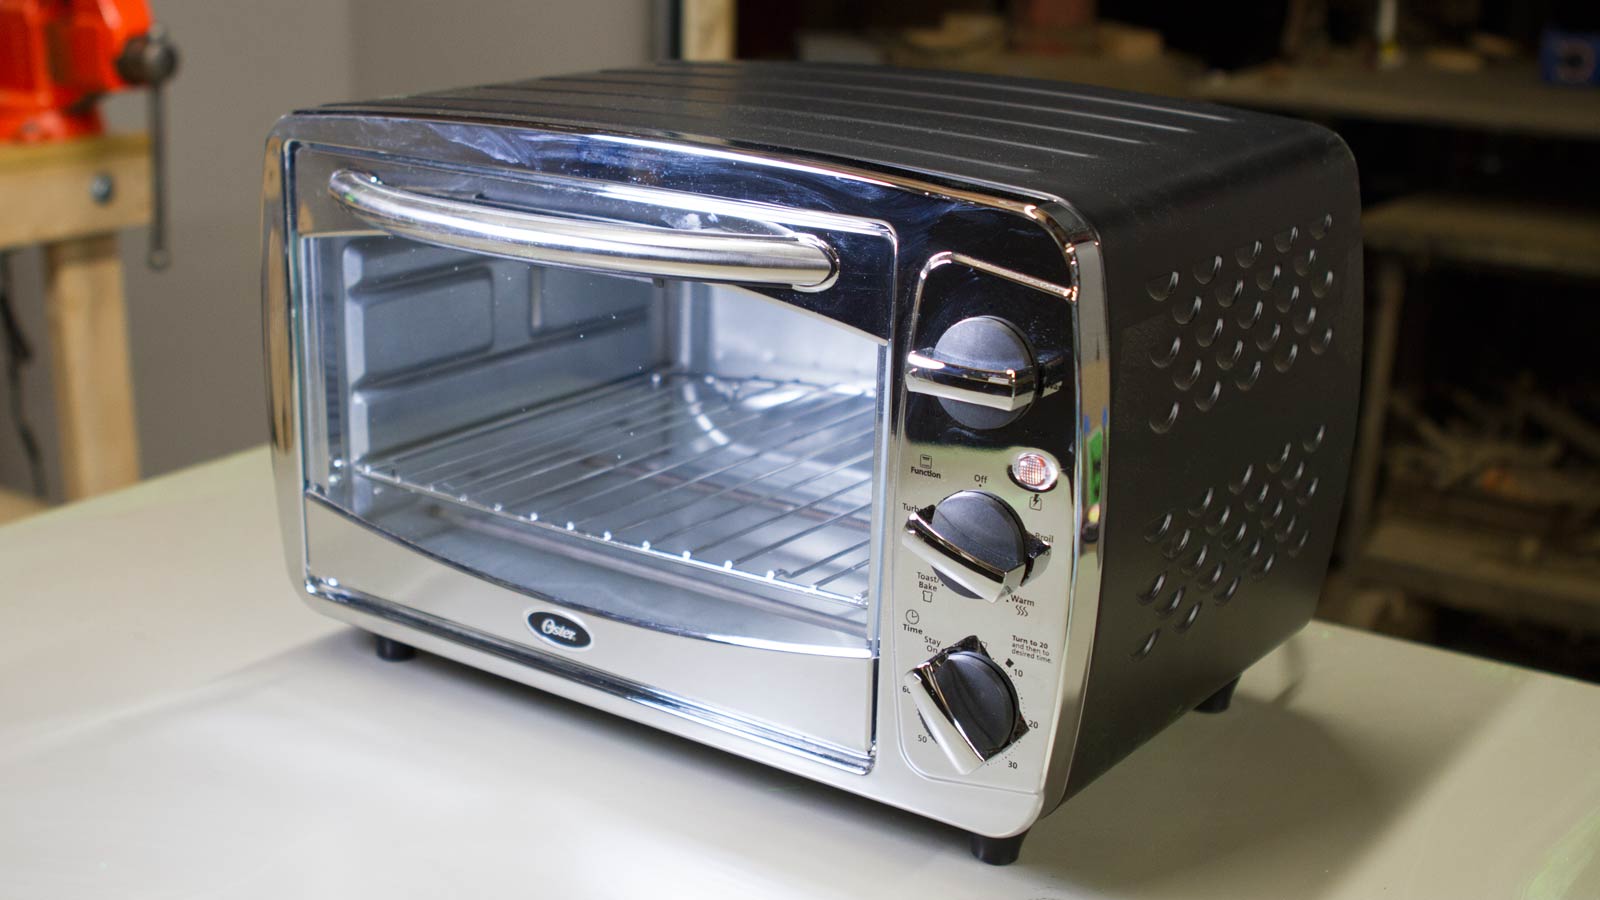 Basic toaster oven